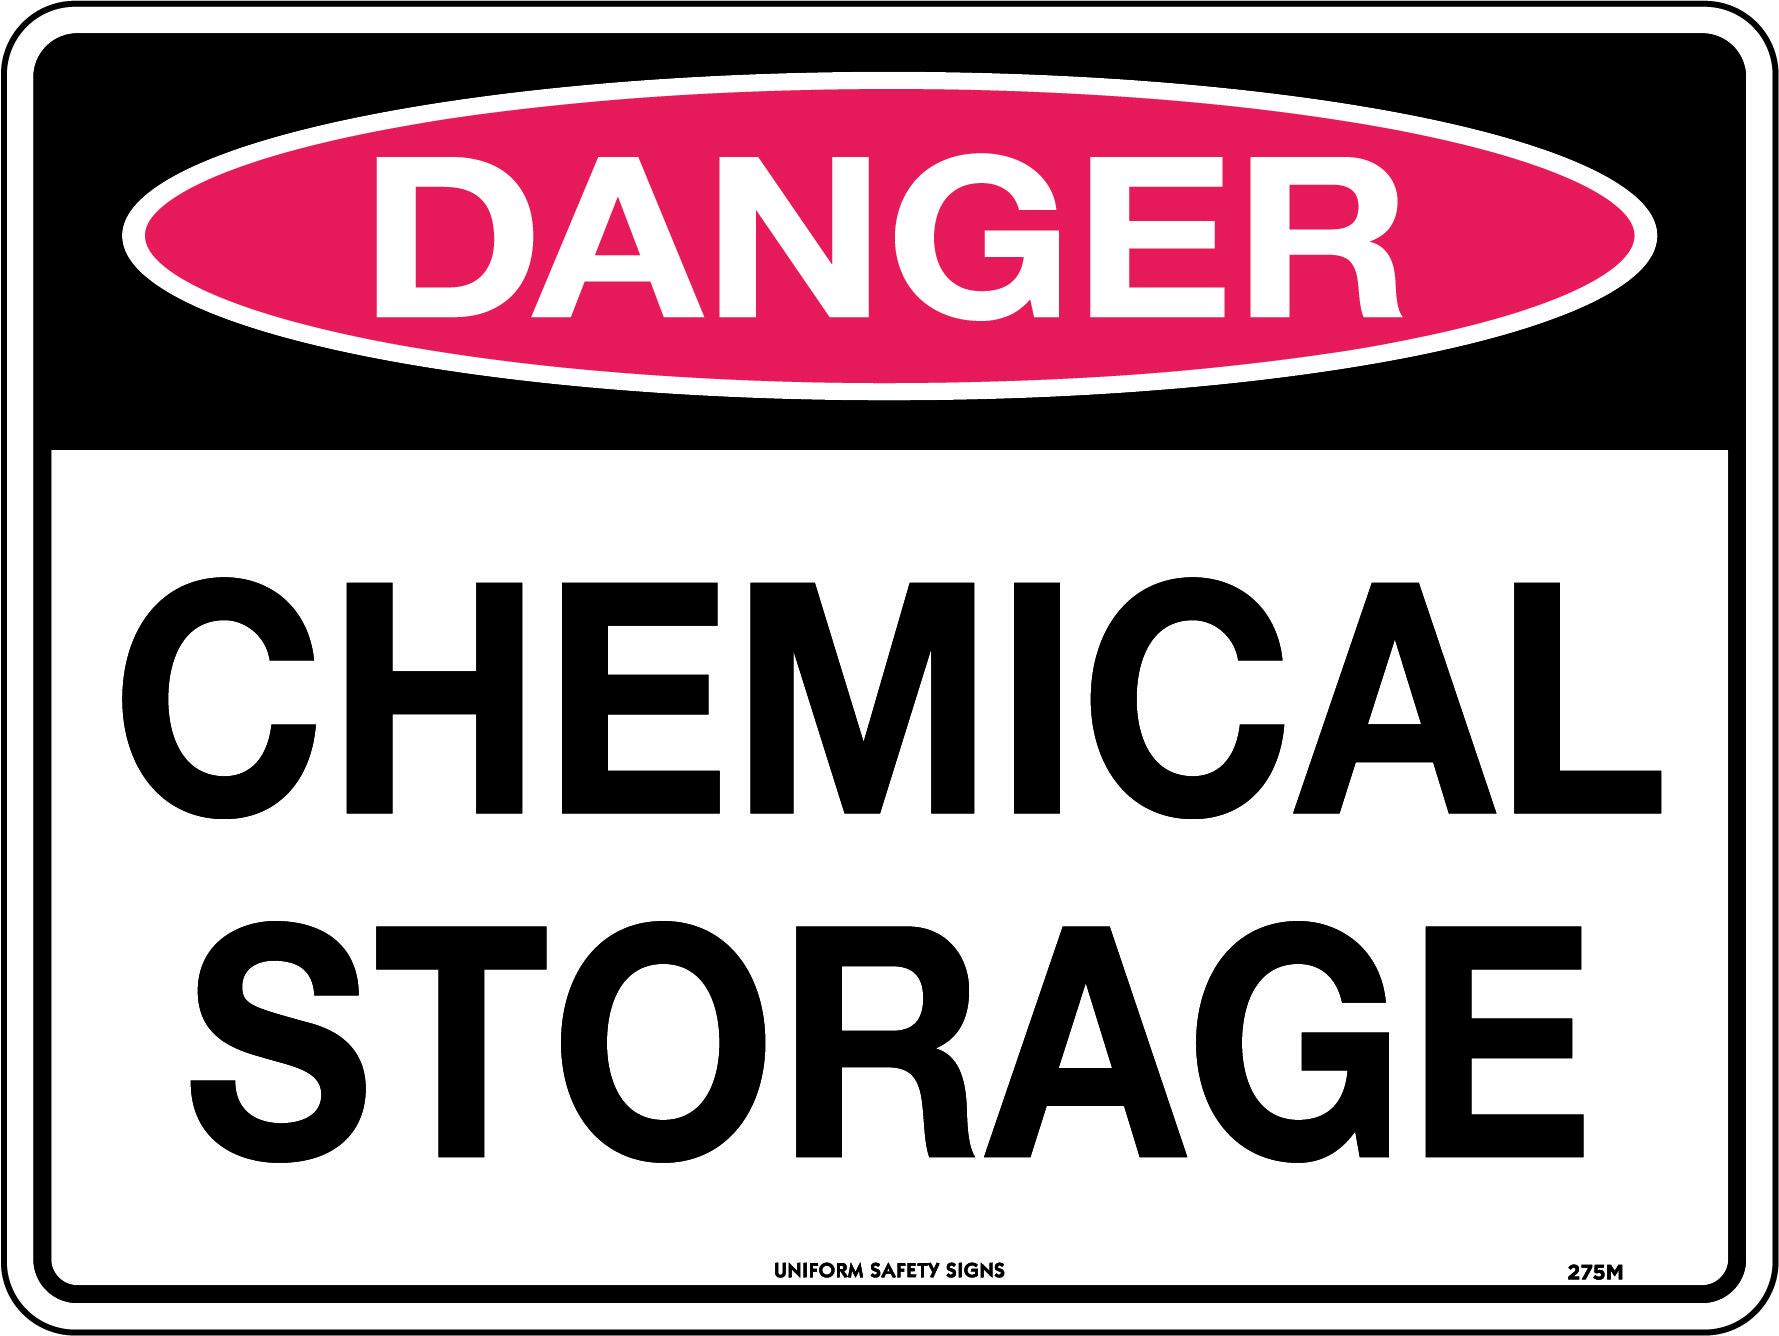 Danger Chemical Storage Uniform Safety Signs